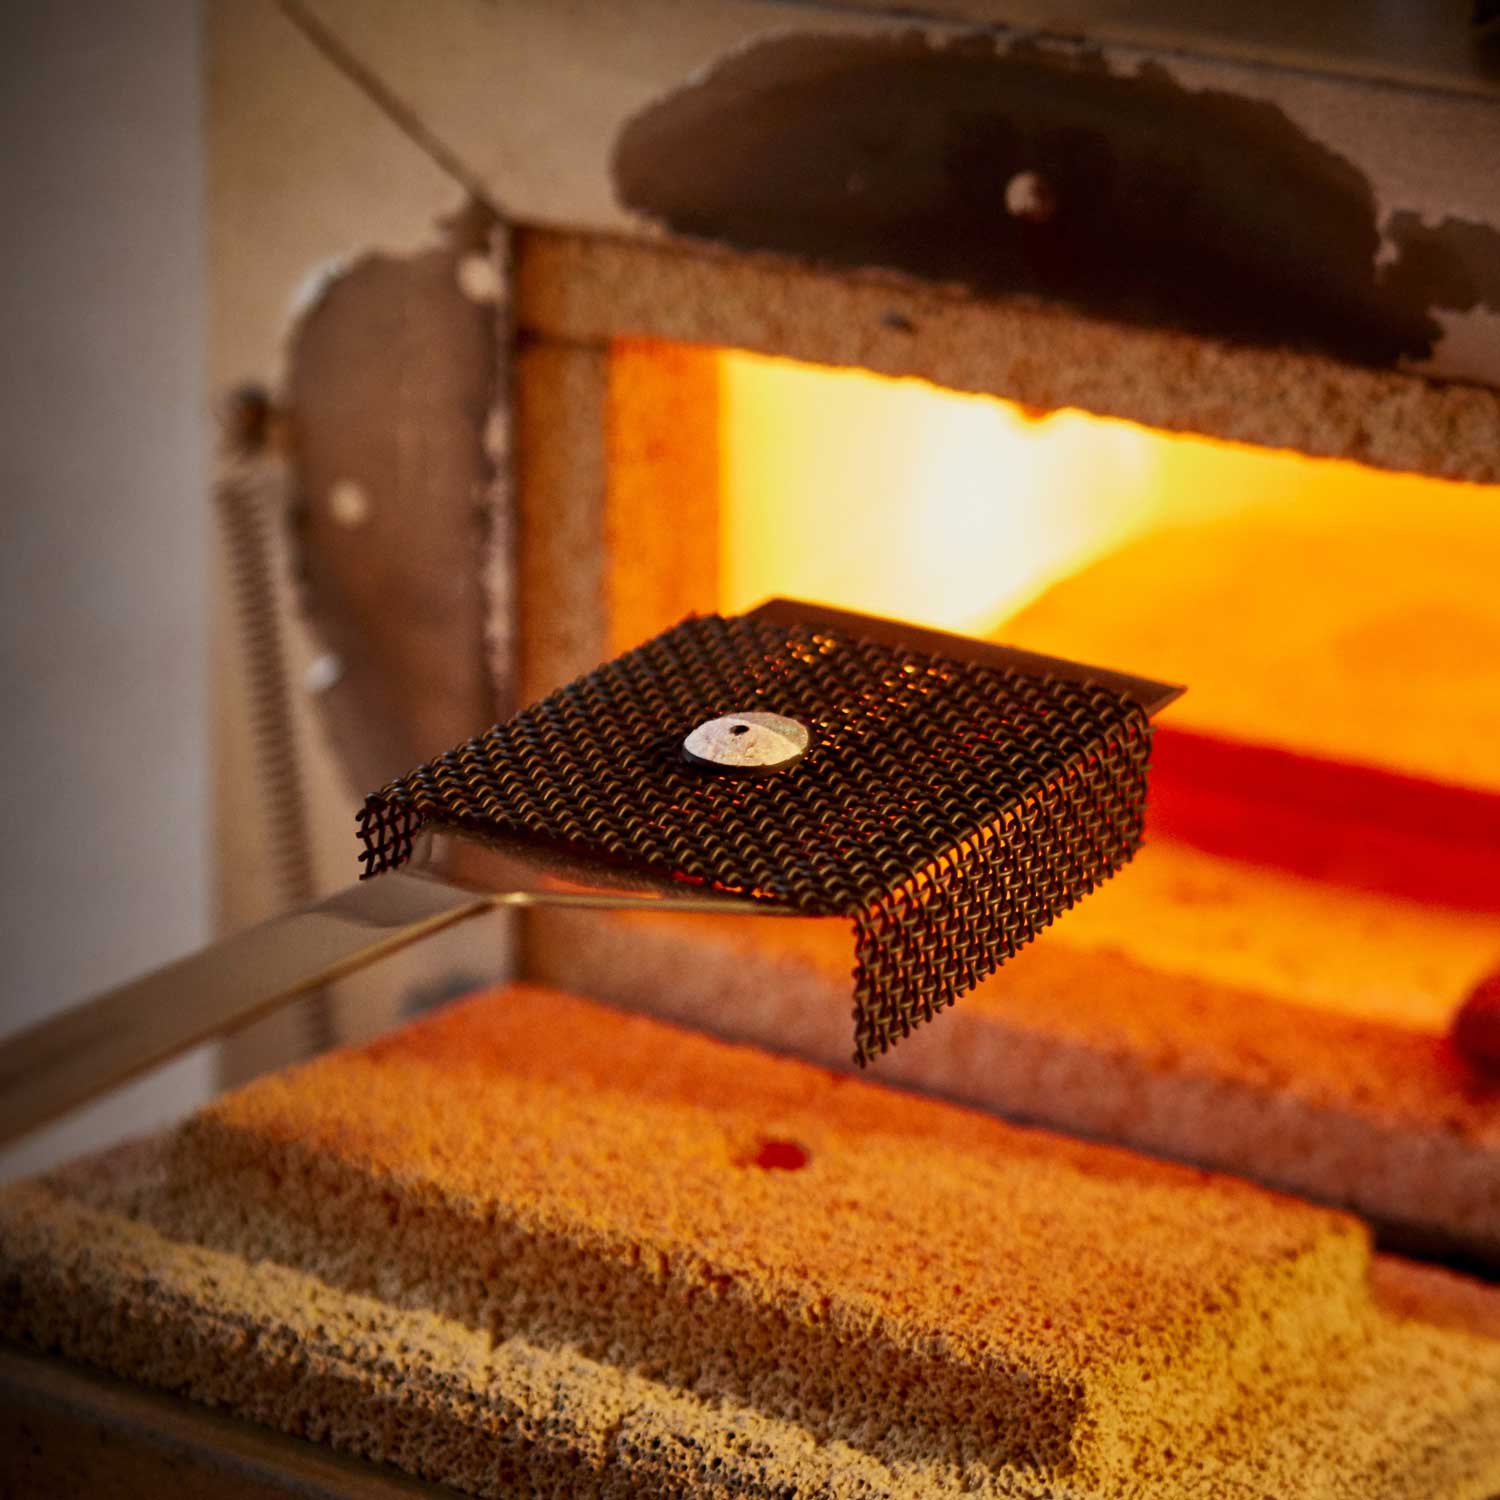 Heating the 5N gold visor (Image: Jerome Bryon)